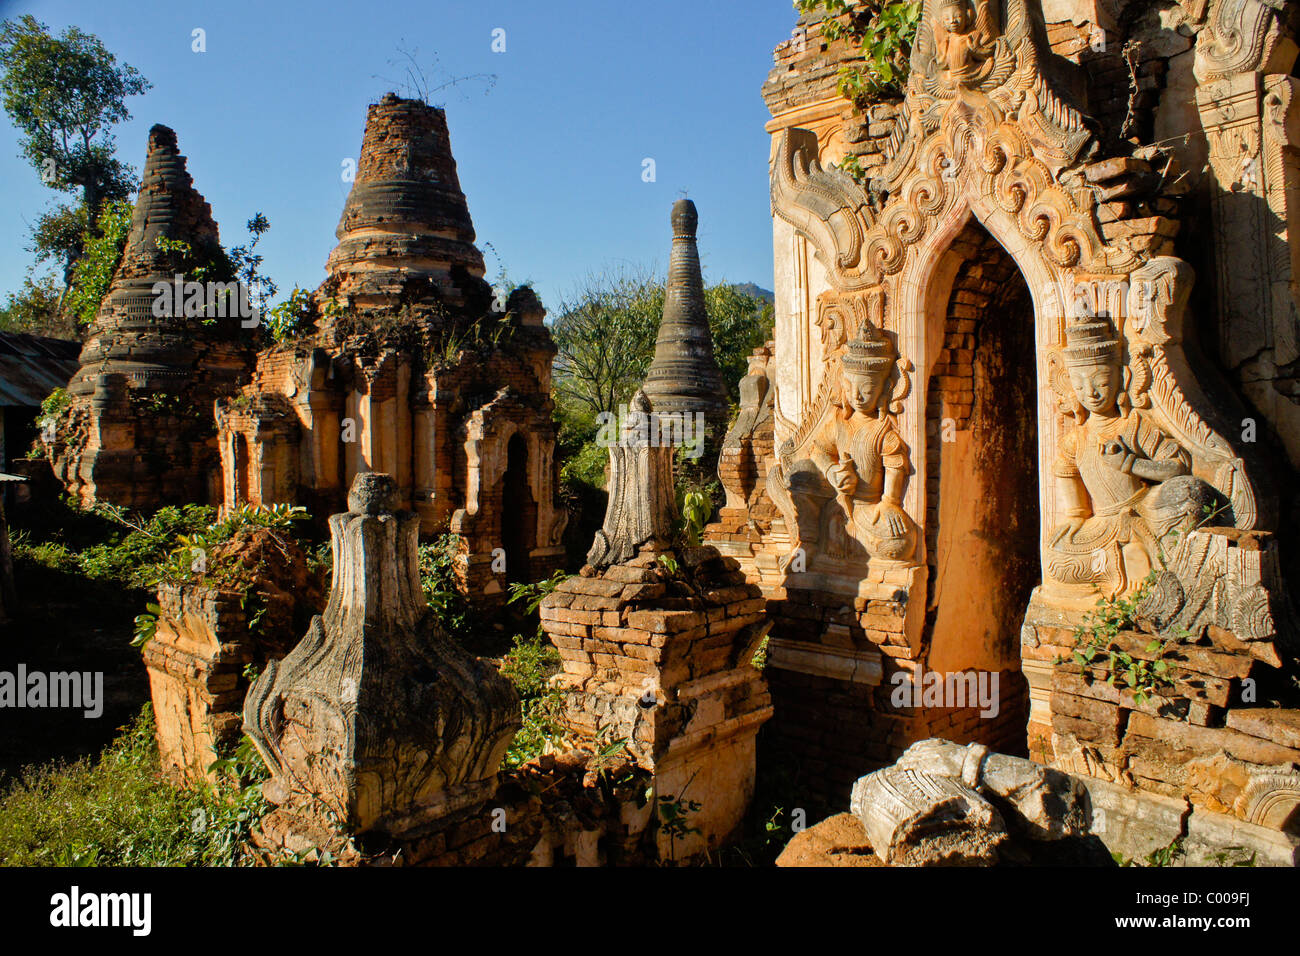 Overgrown ruins of pagodas, In Dein, Inle Lake, Myanmar (Burma) Stock Photo